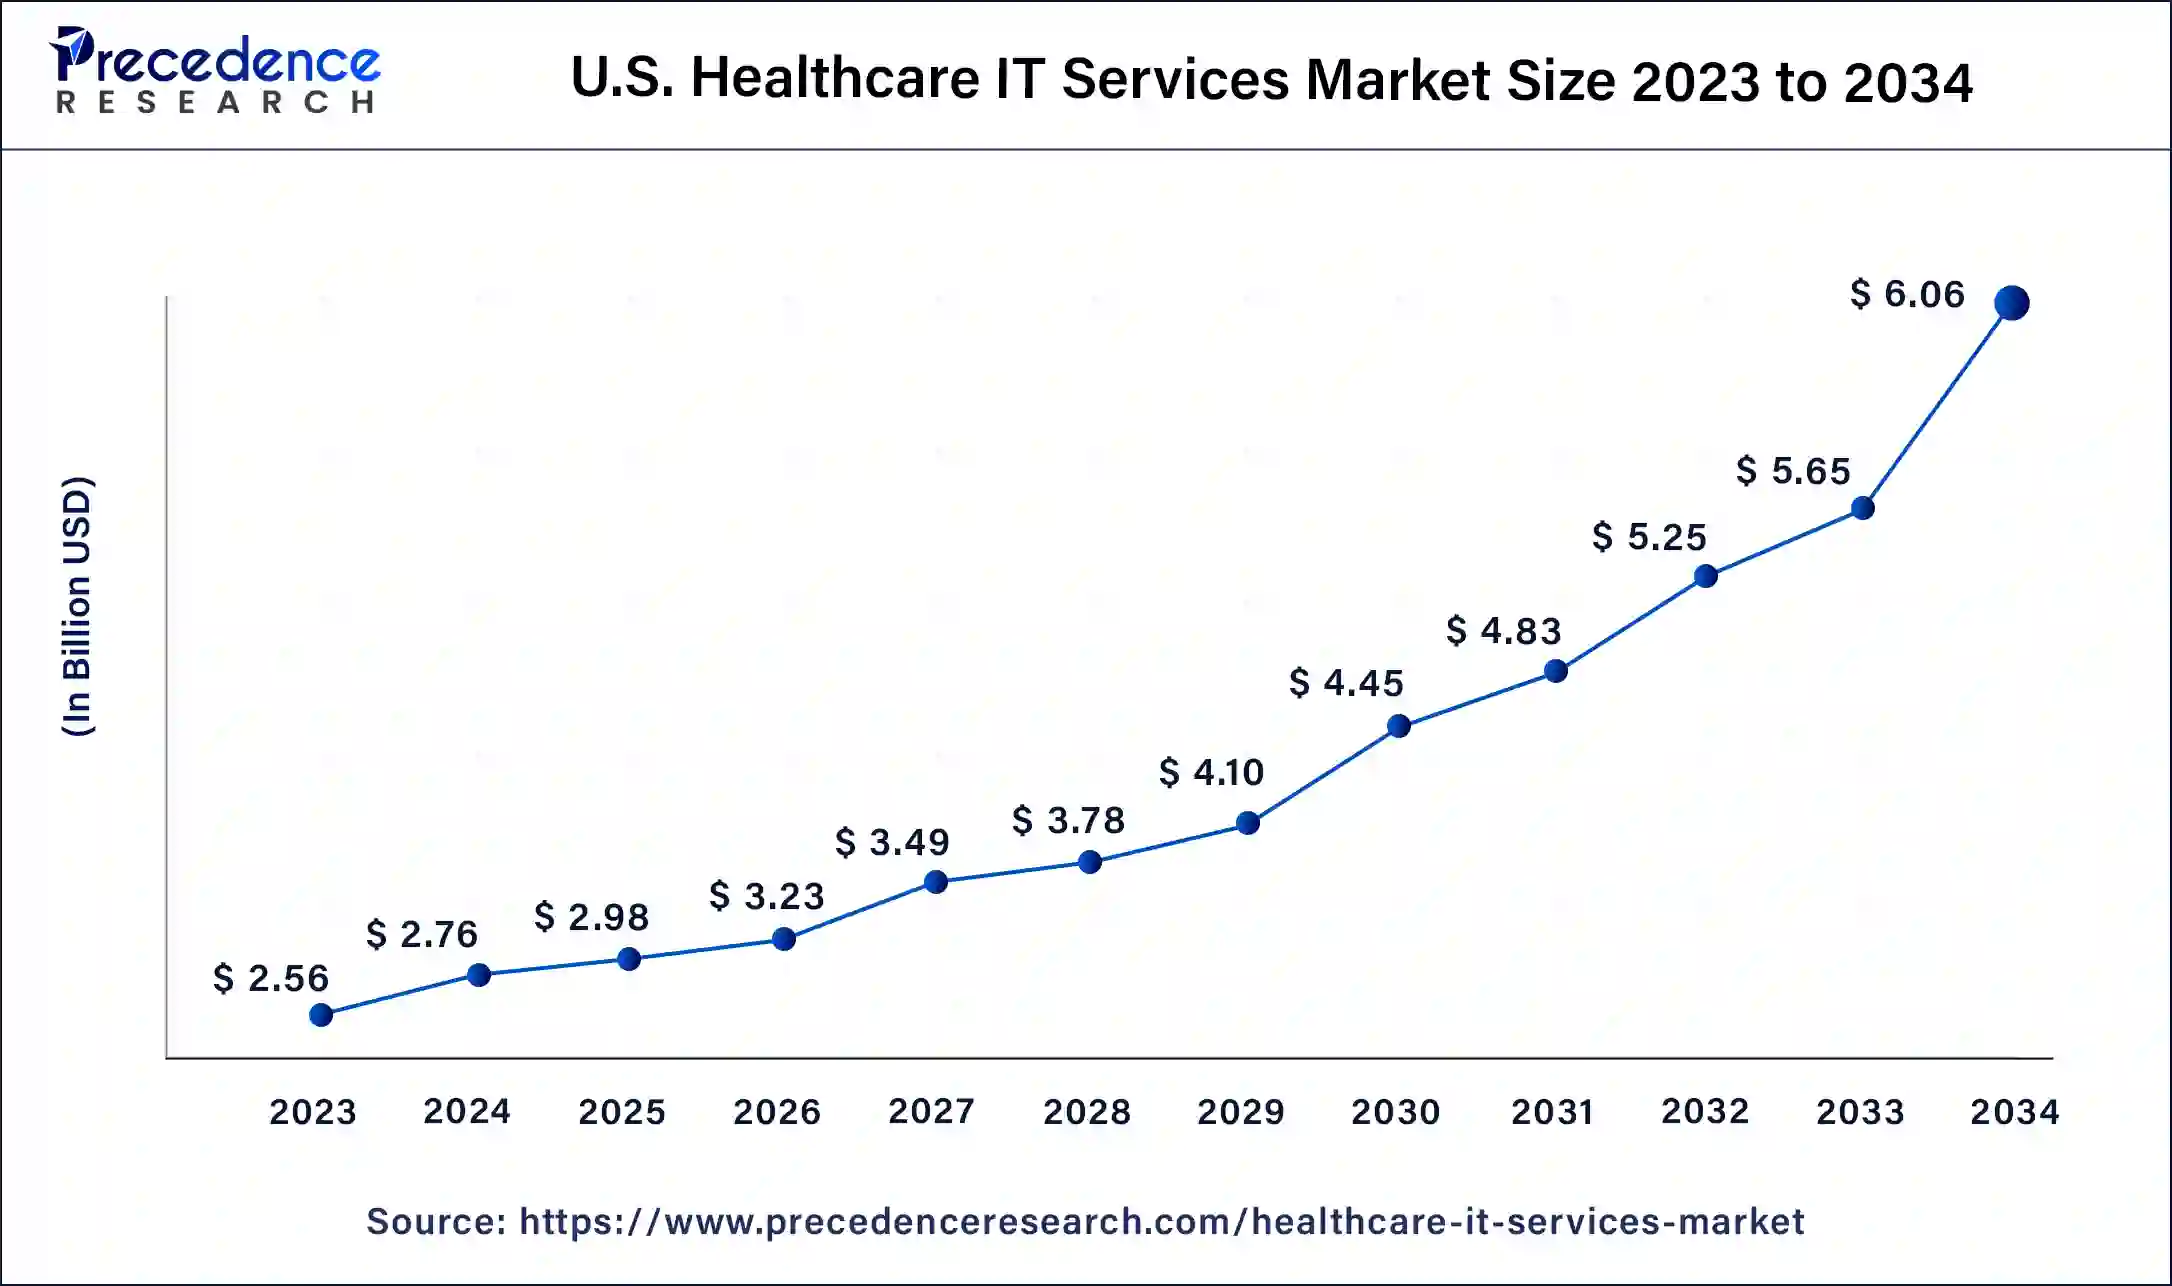 U.S. Healthcare IT Services Market Size 2024 To 2034